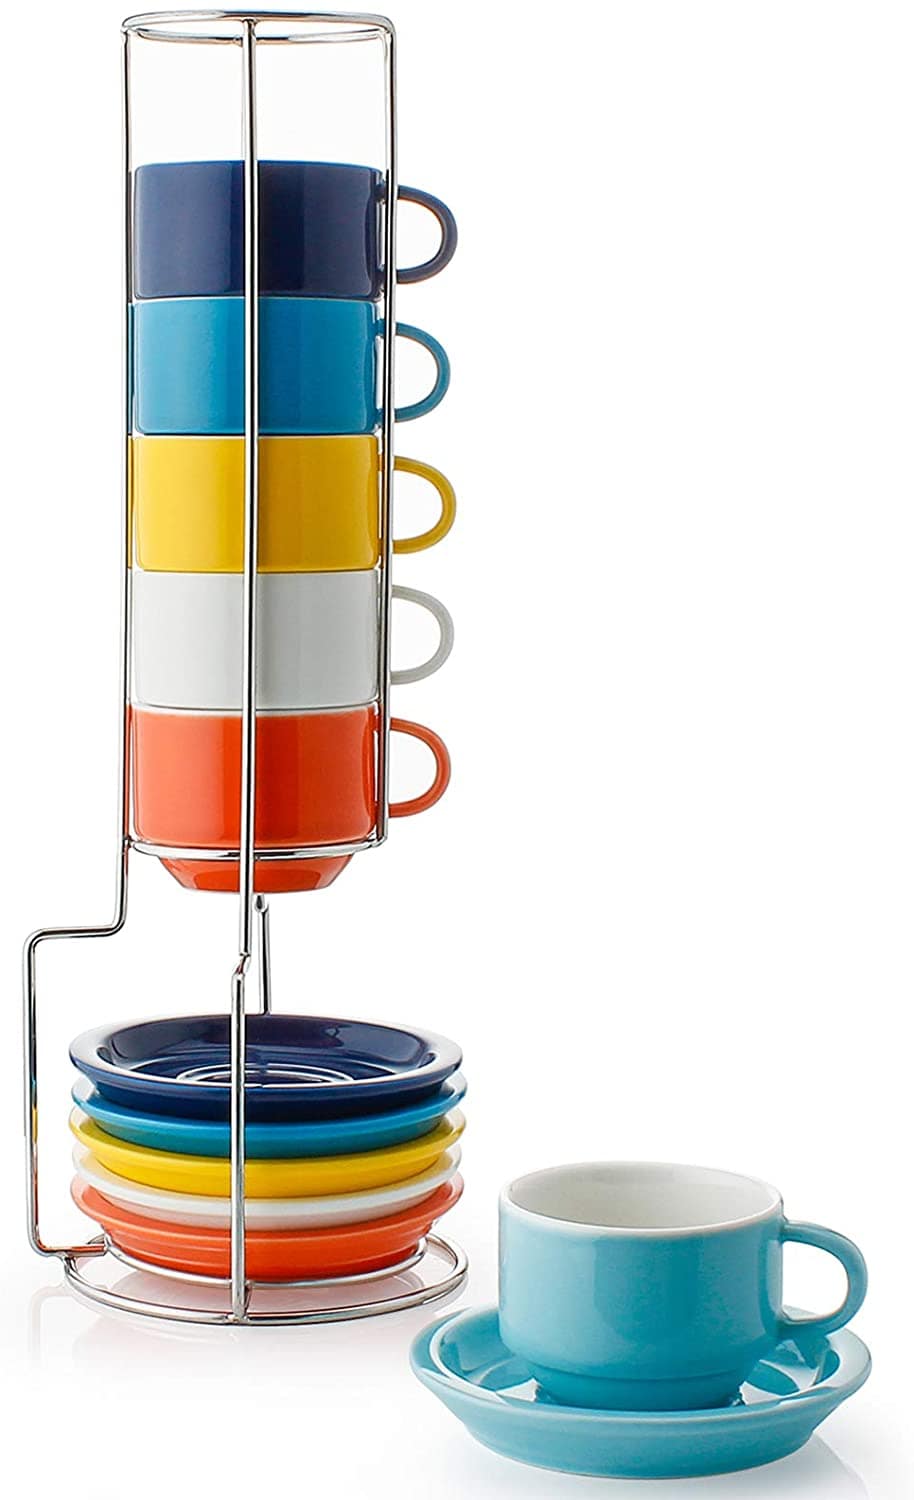 Heated Espresso-Sized Coffee Cups : heated espresso cup